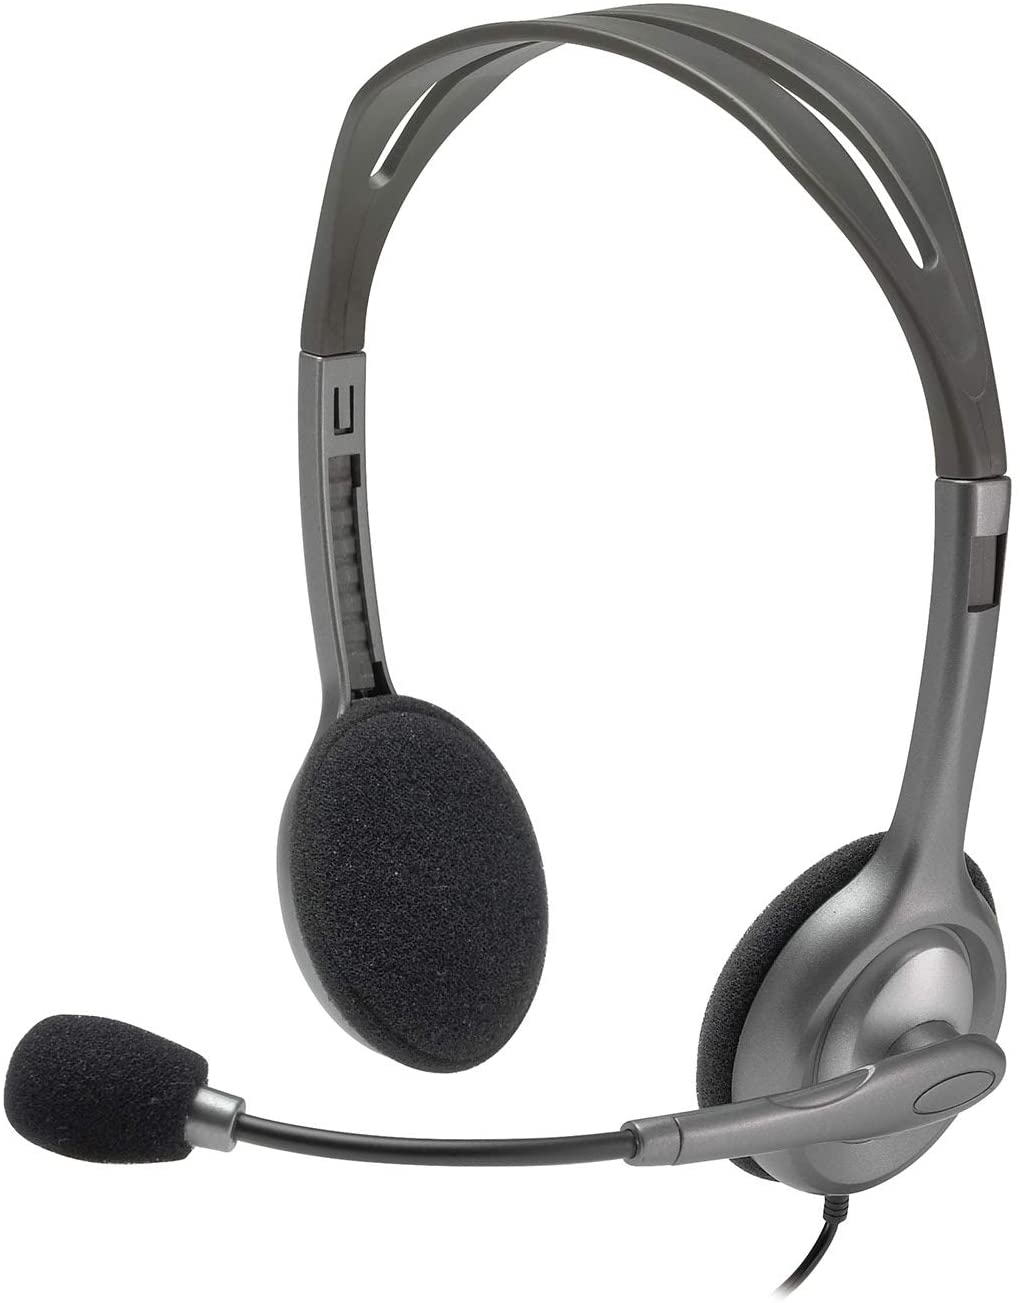 Logitech H110 Multi-device Stereo Headset Headphone with Double 3.5mm Jack Plug